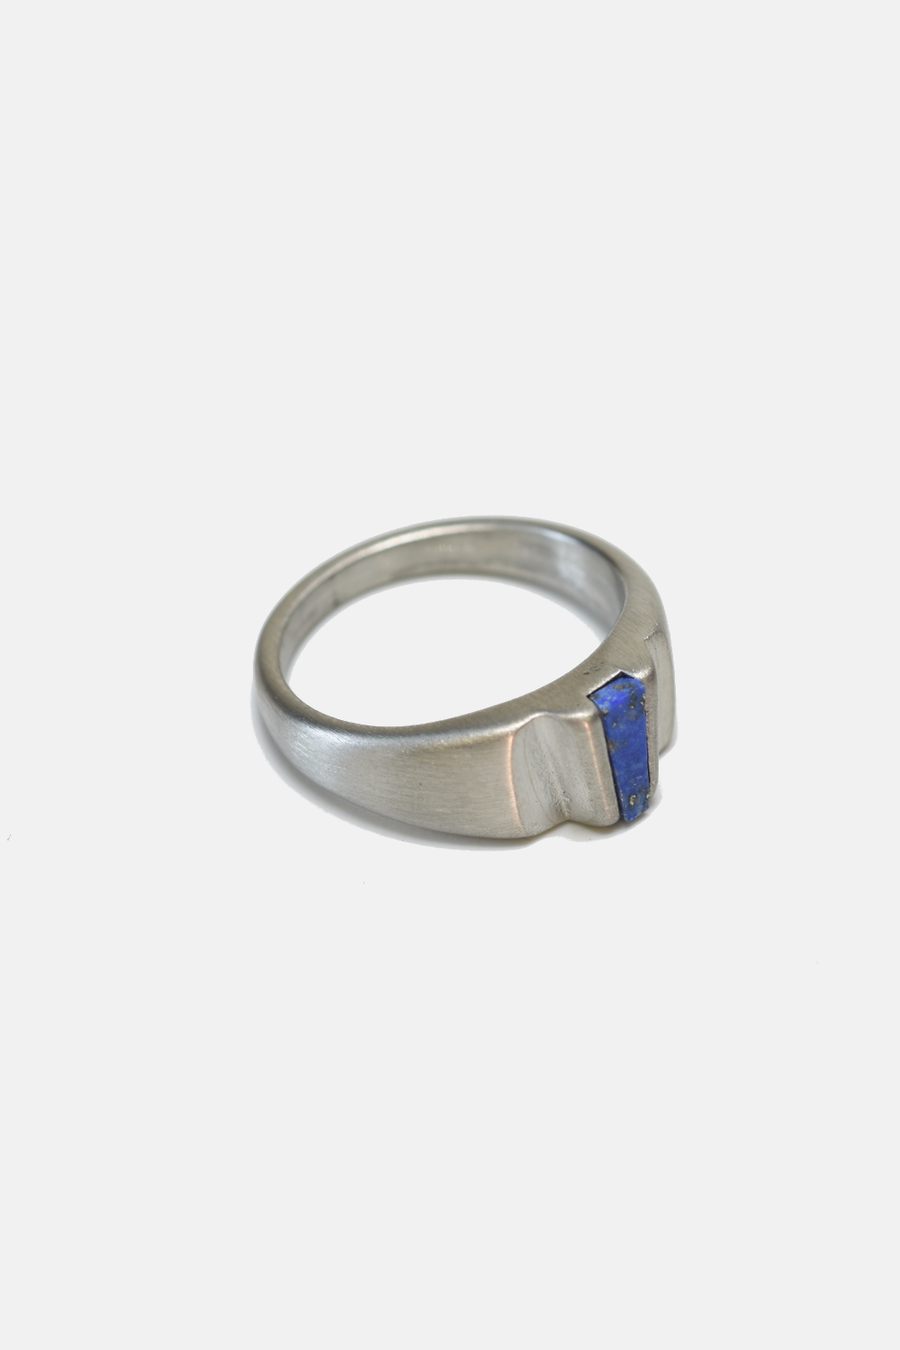 Lapis Lazuli Inlay Ring: 11